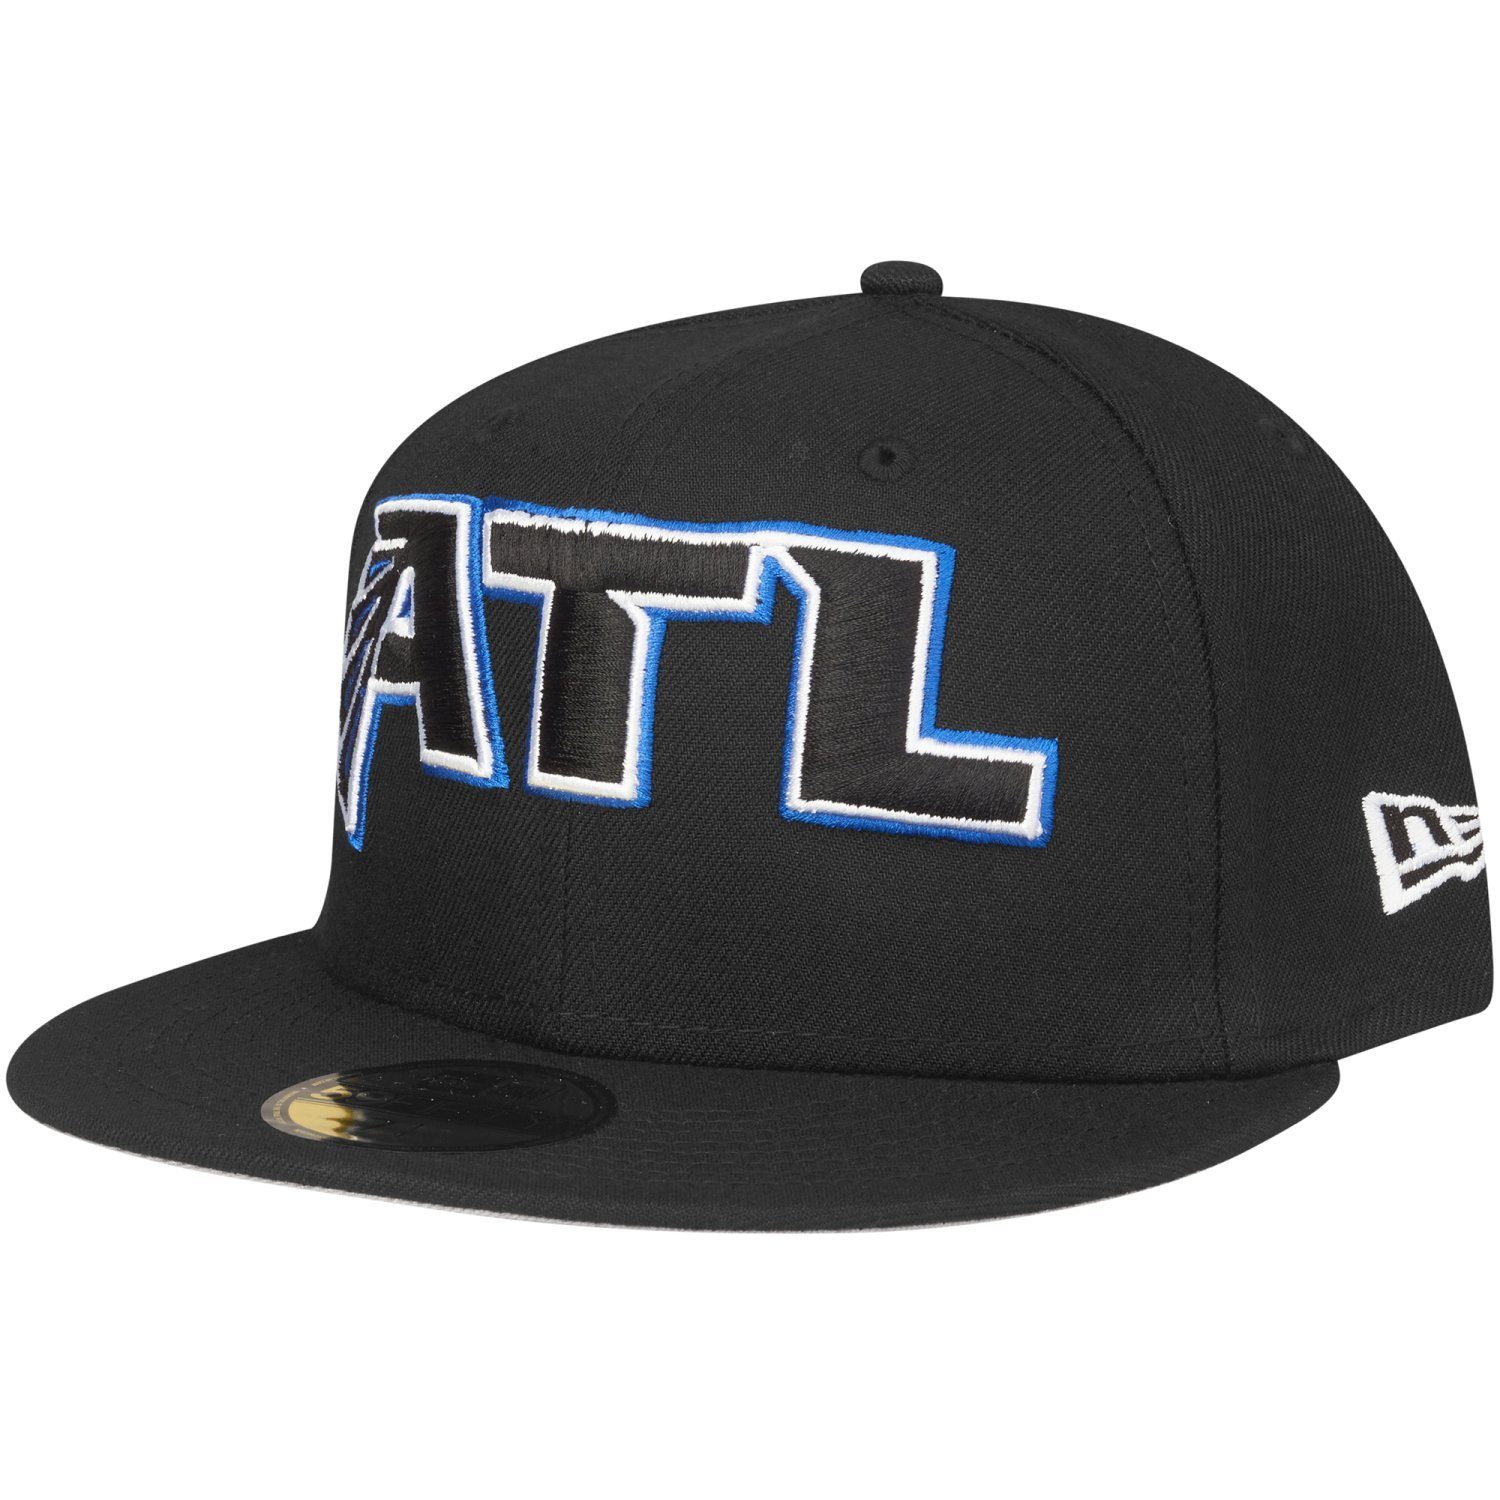 New Era Fitted Cap 59Fifty ATL Atlanta Falcons